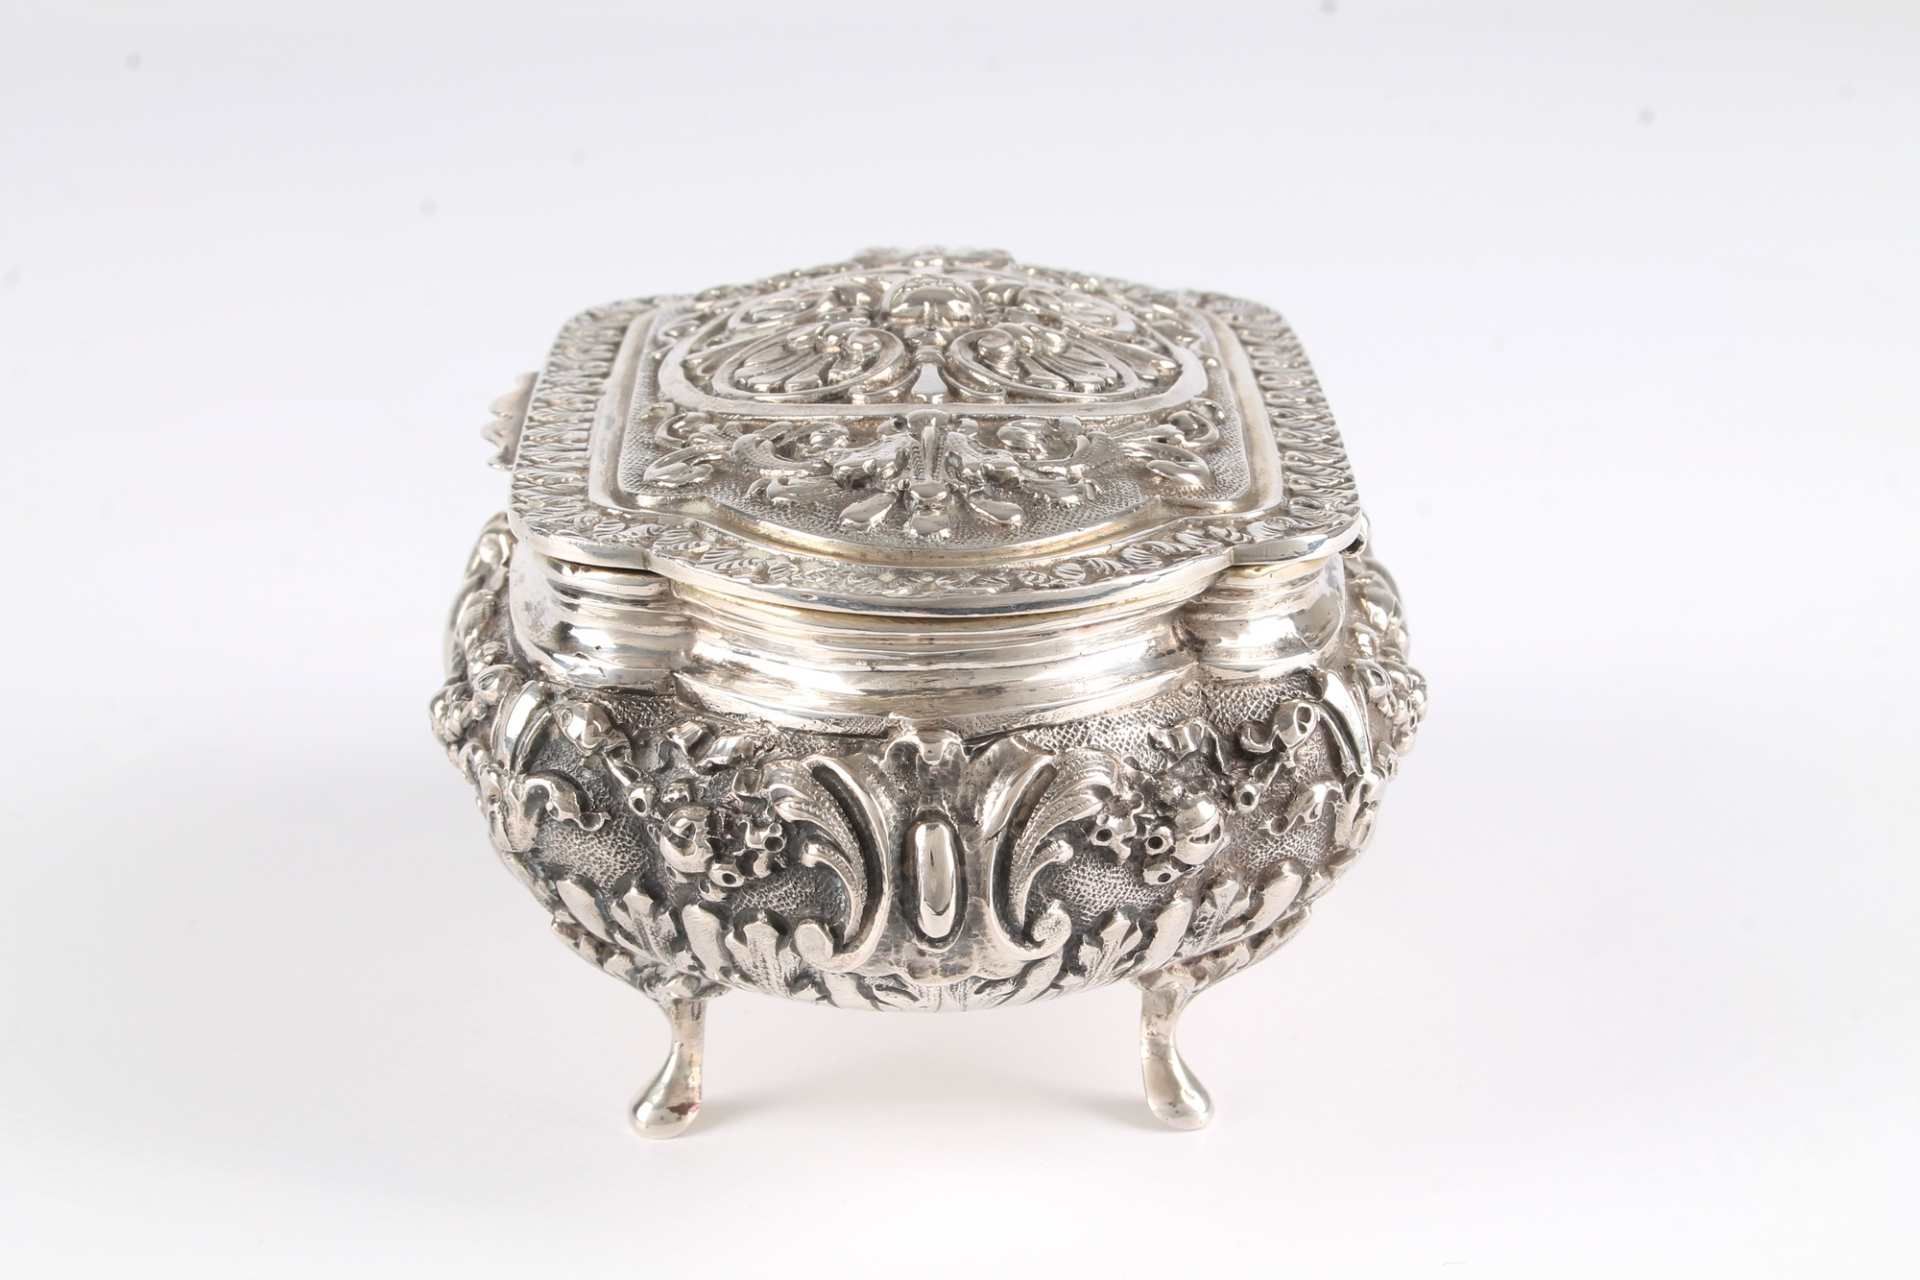 800 Silber Schmuckdose, silver jewelry box art nouveau, - Image 7 of 7